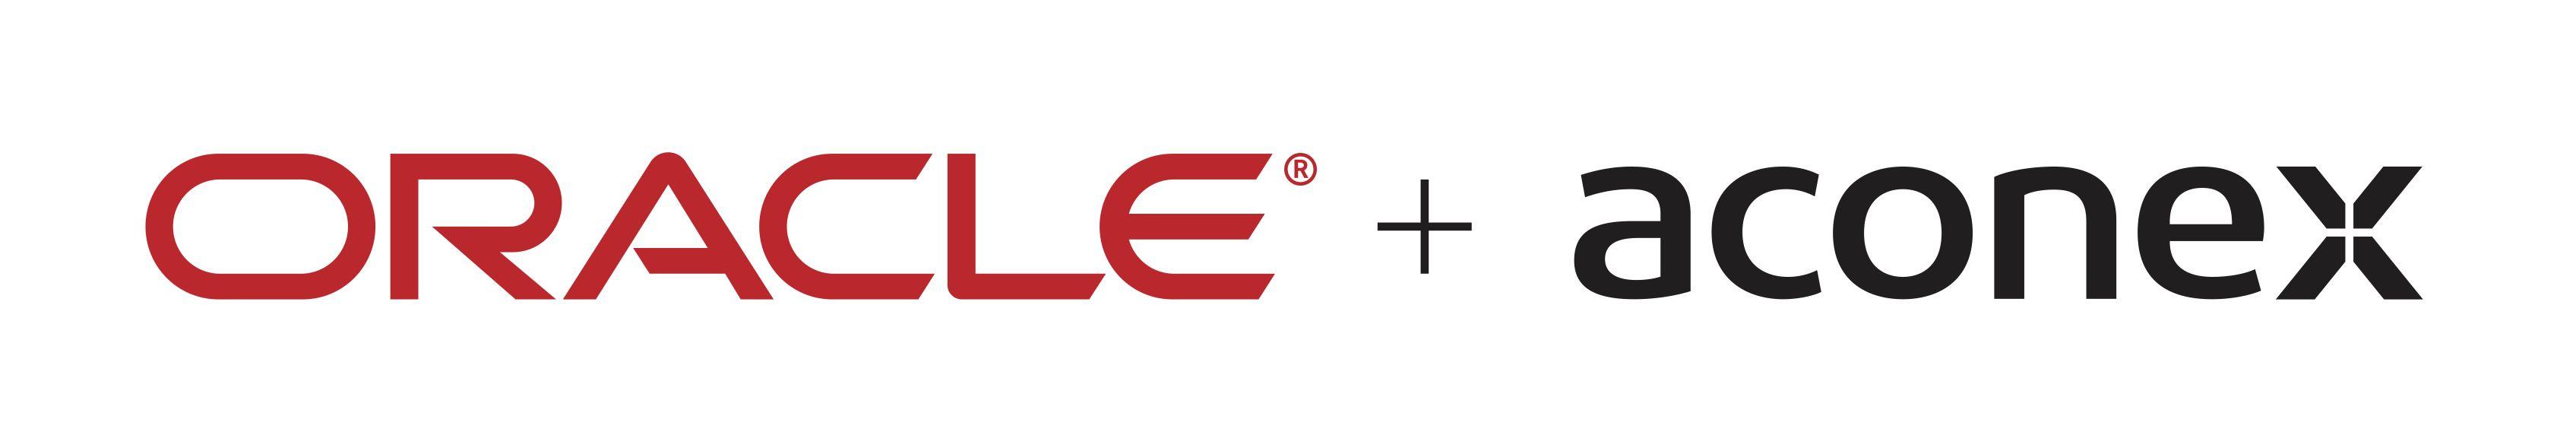 Aconex Logo - oracle-aconex - Dropbox